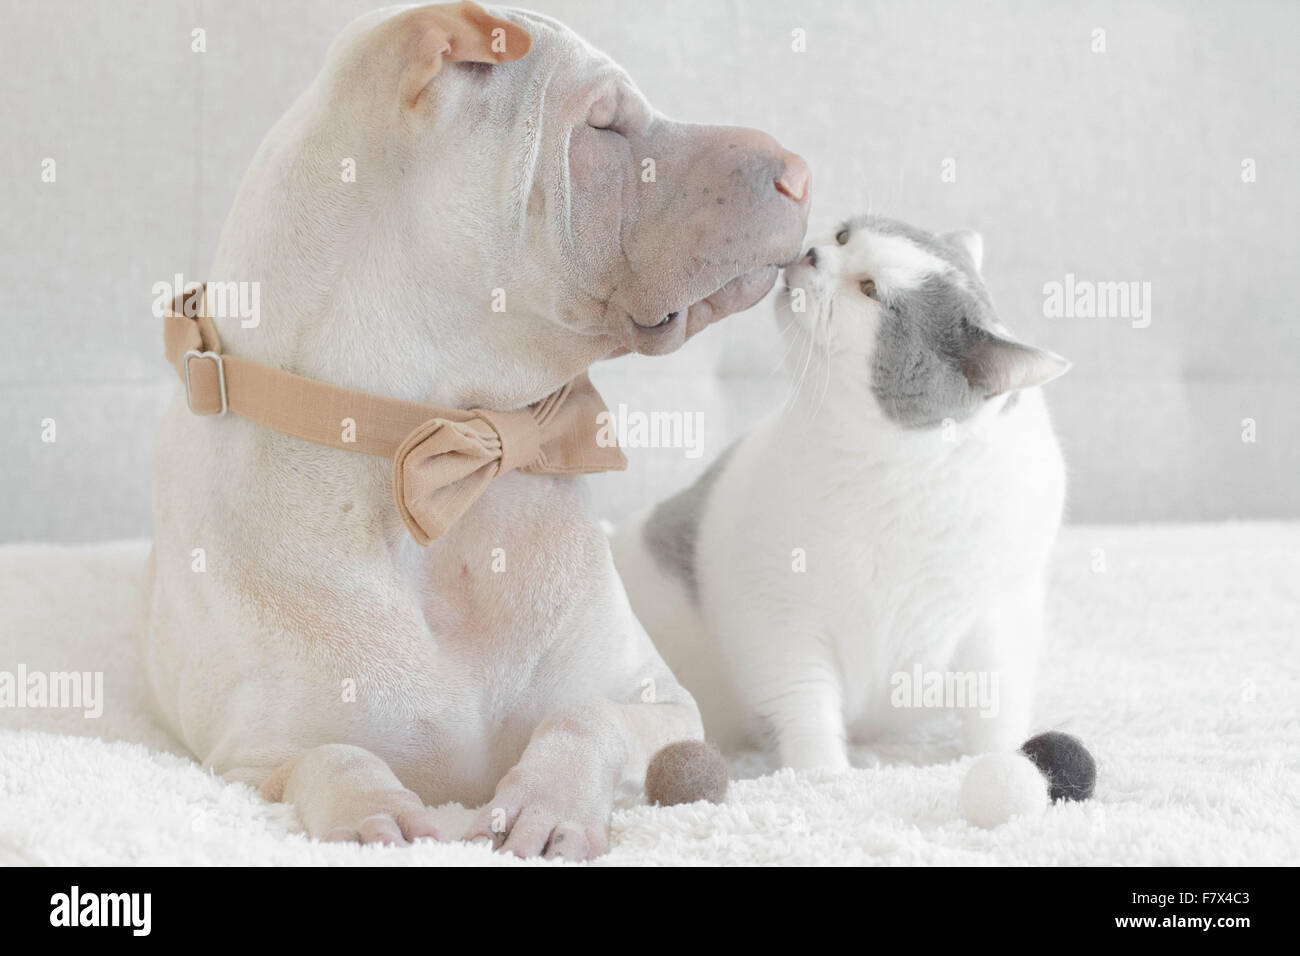 Shar Pei dog kissing a cat Stock Photo